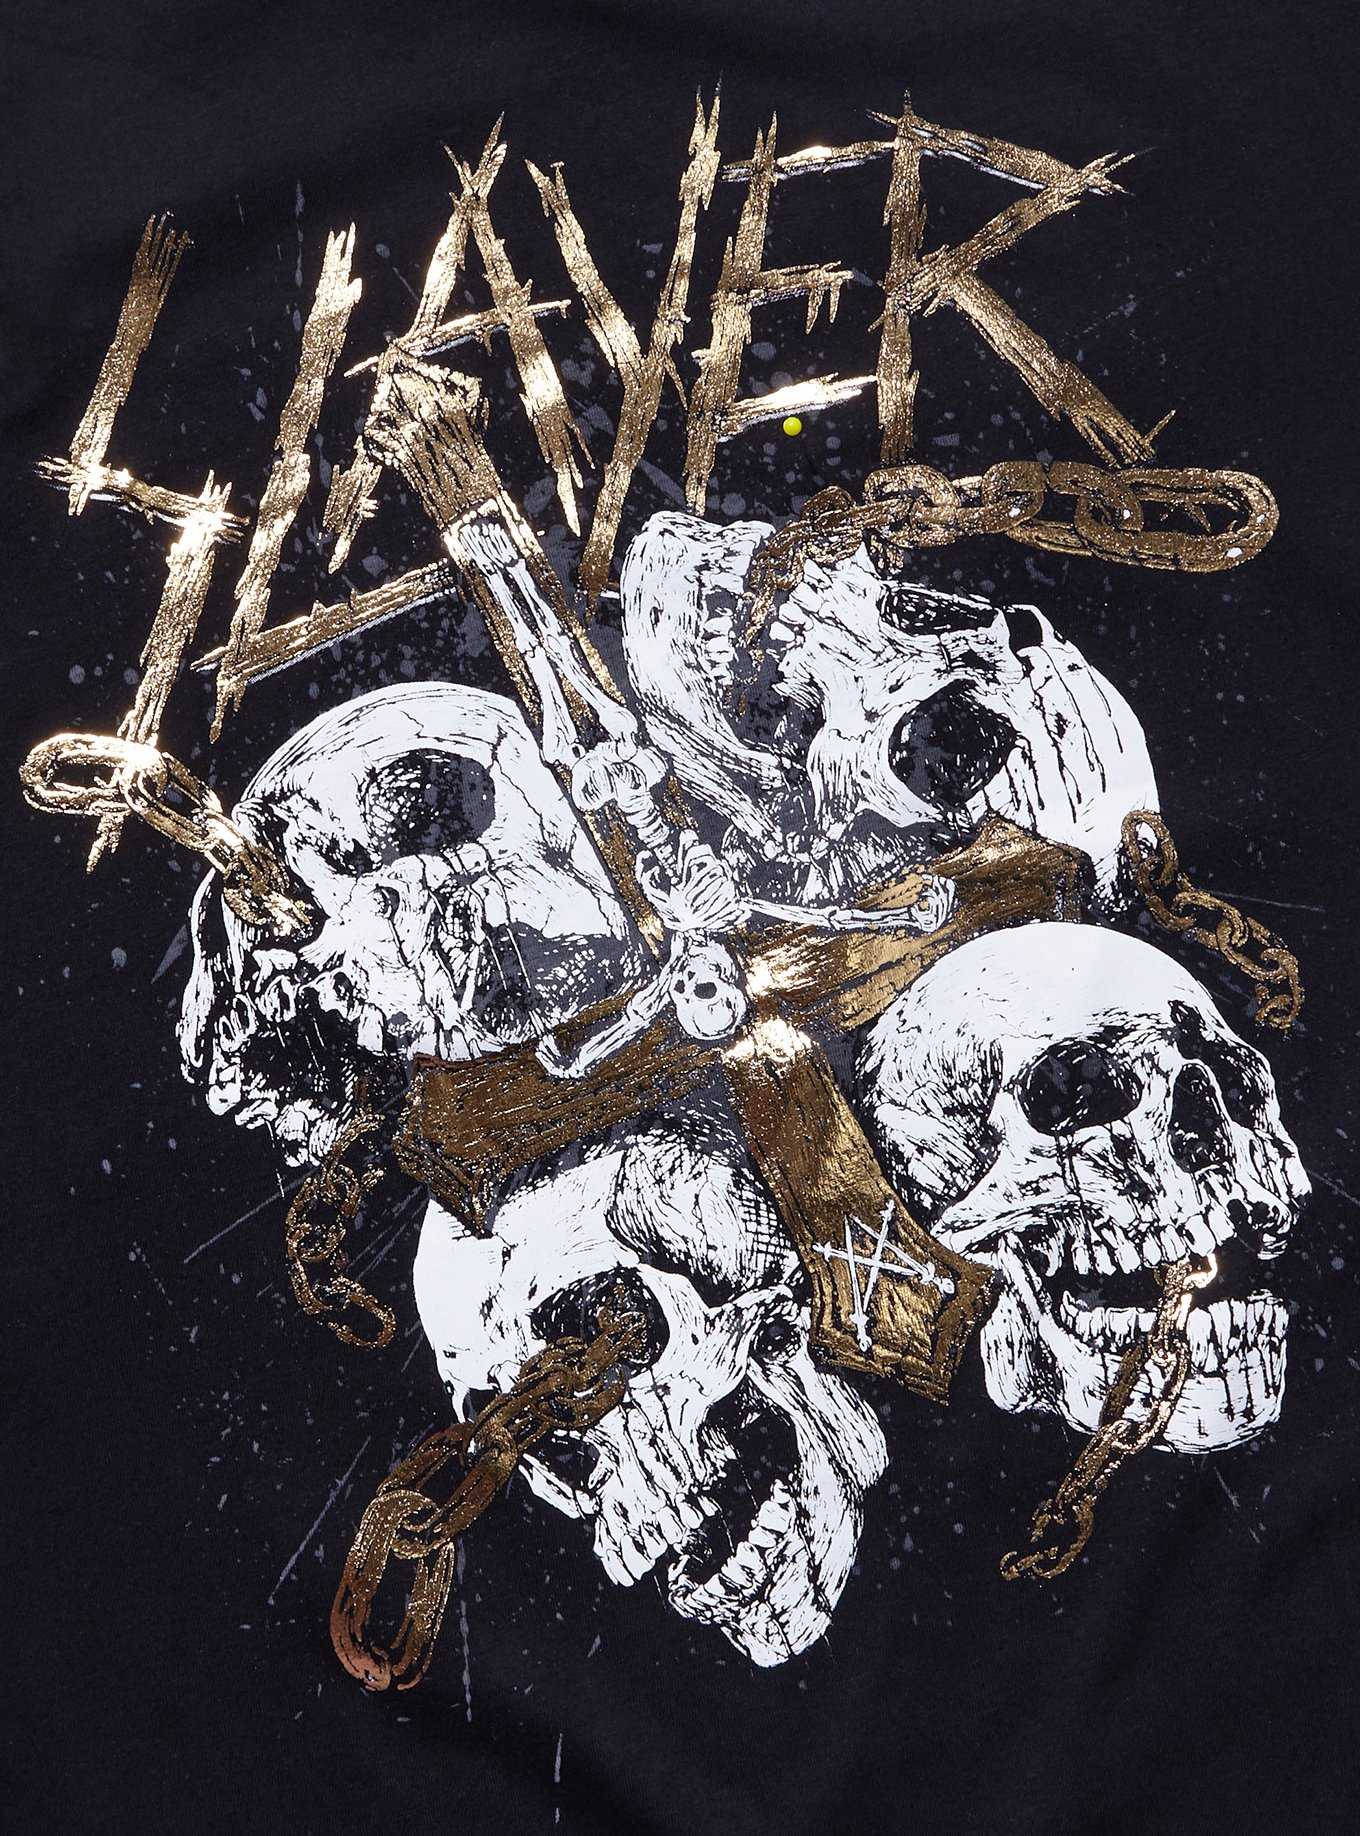 Slayer Gold Cross & Skulls Boyfriend Fit Girls T-Shirt, , hi-res